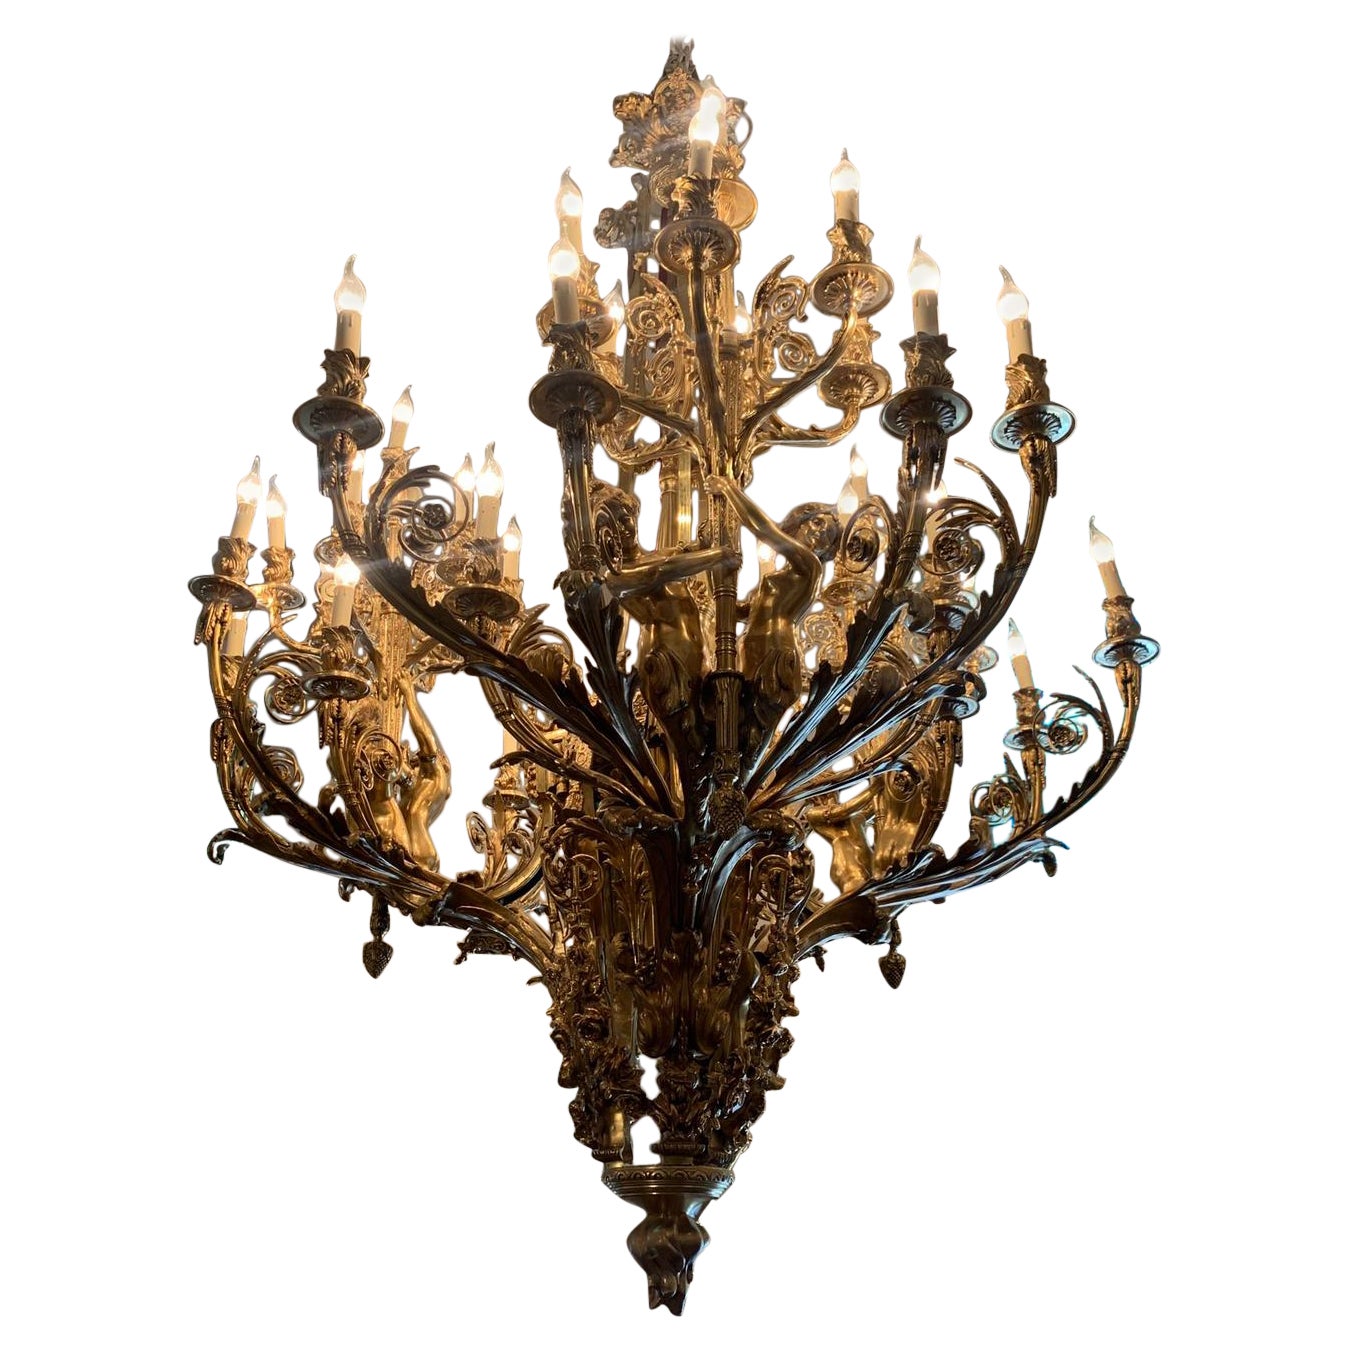 Superbe lustre baroque en bronze massif ancien de 7 pieds de haut. 